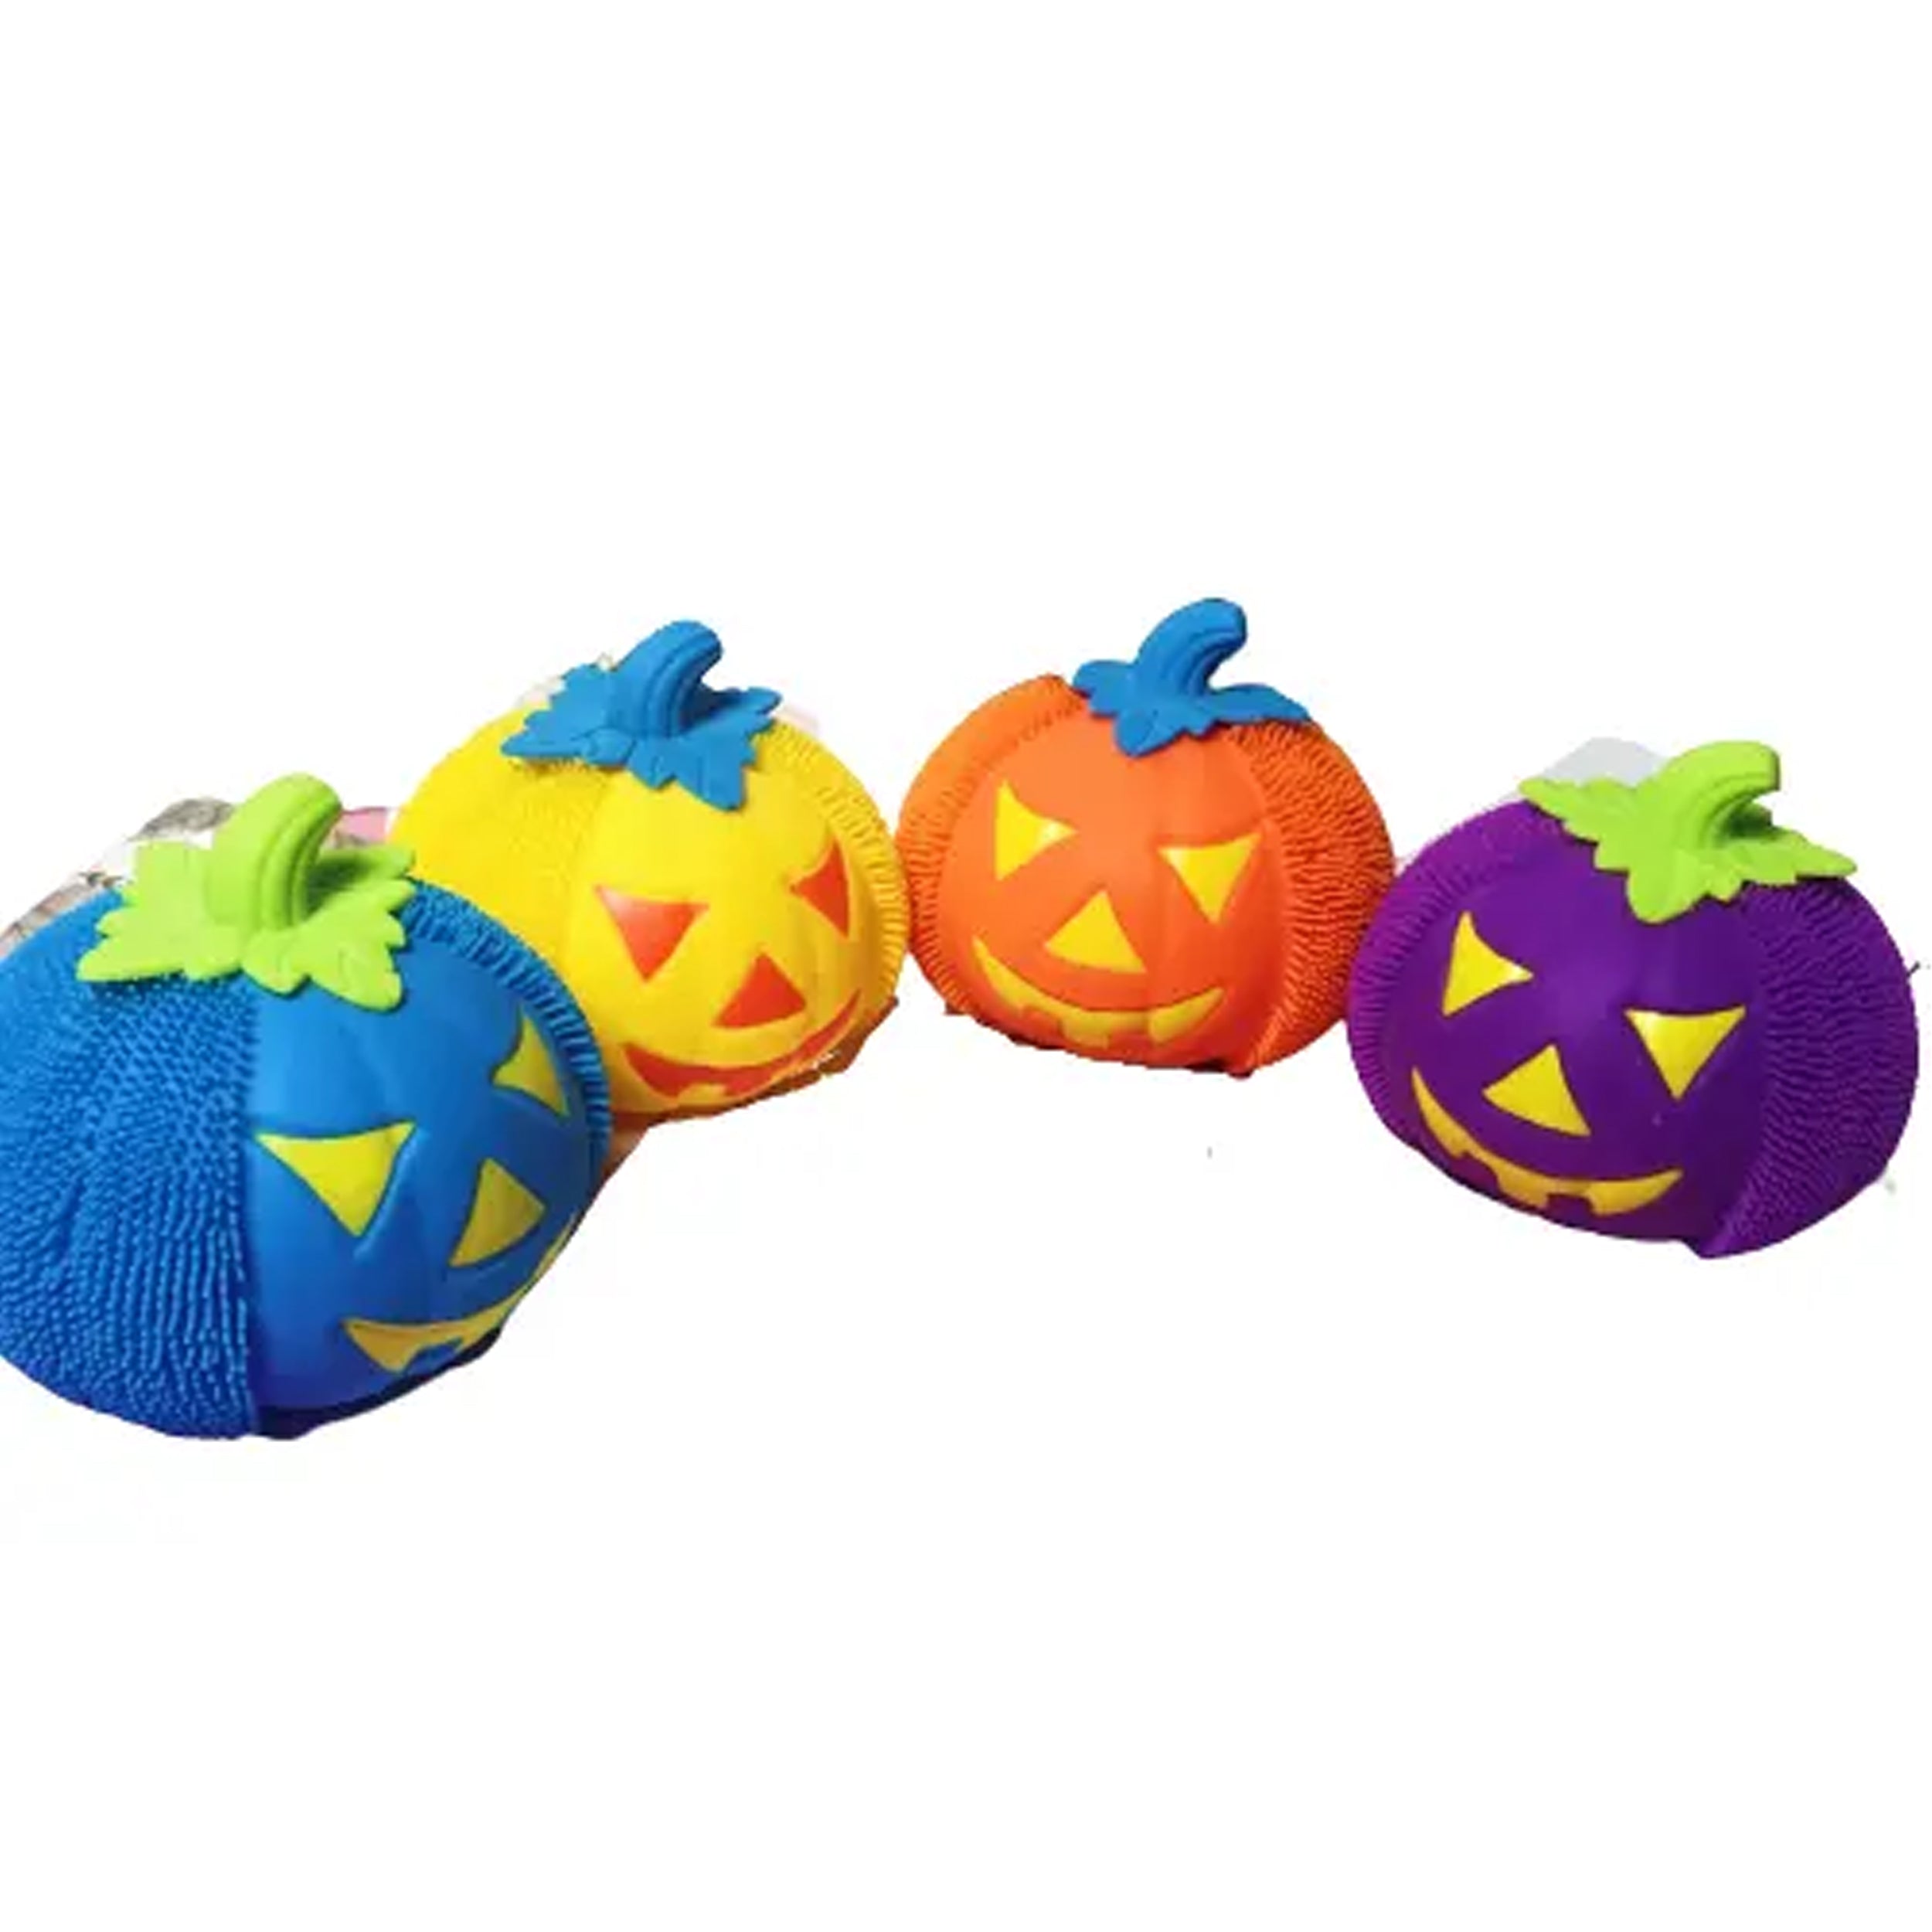 LED Halloween Pumpkin Stress Relief Toy